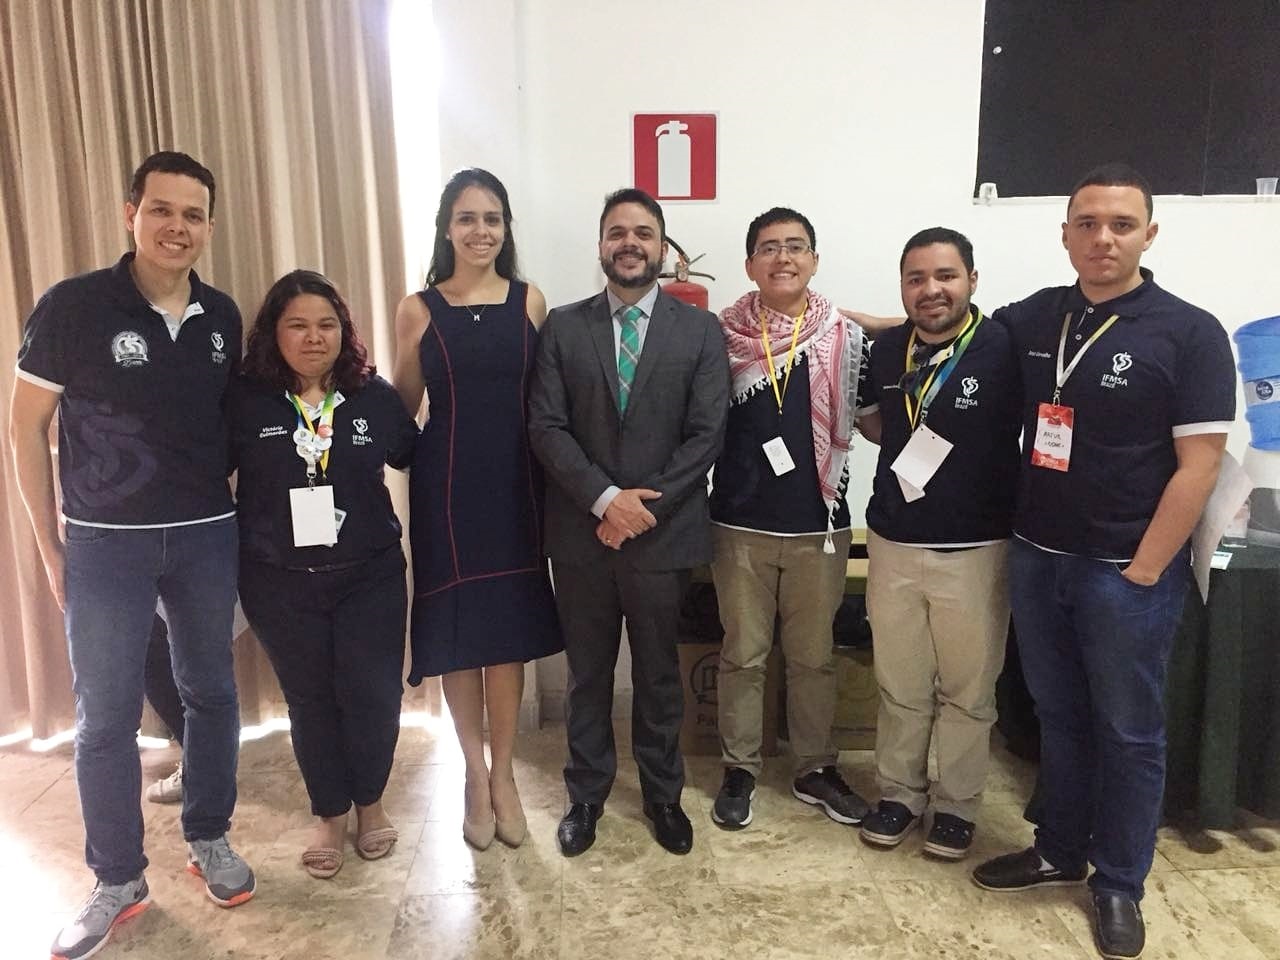 O conselheiro federal do Piauí, Leonardo Sérvio Luz, (ao centro) apresentou os temas "O movimento estudantil e o futuro da medicina" e "Saúde LGBT"